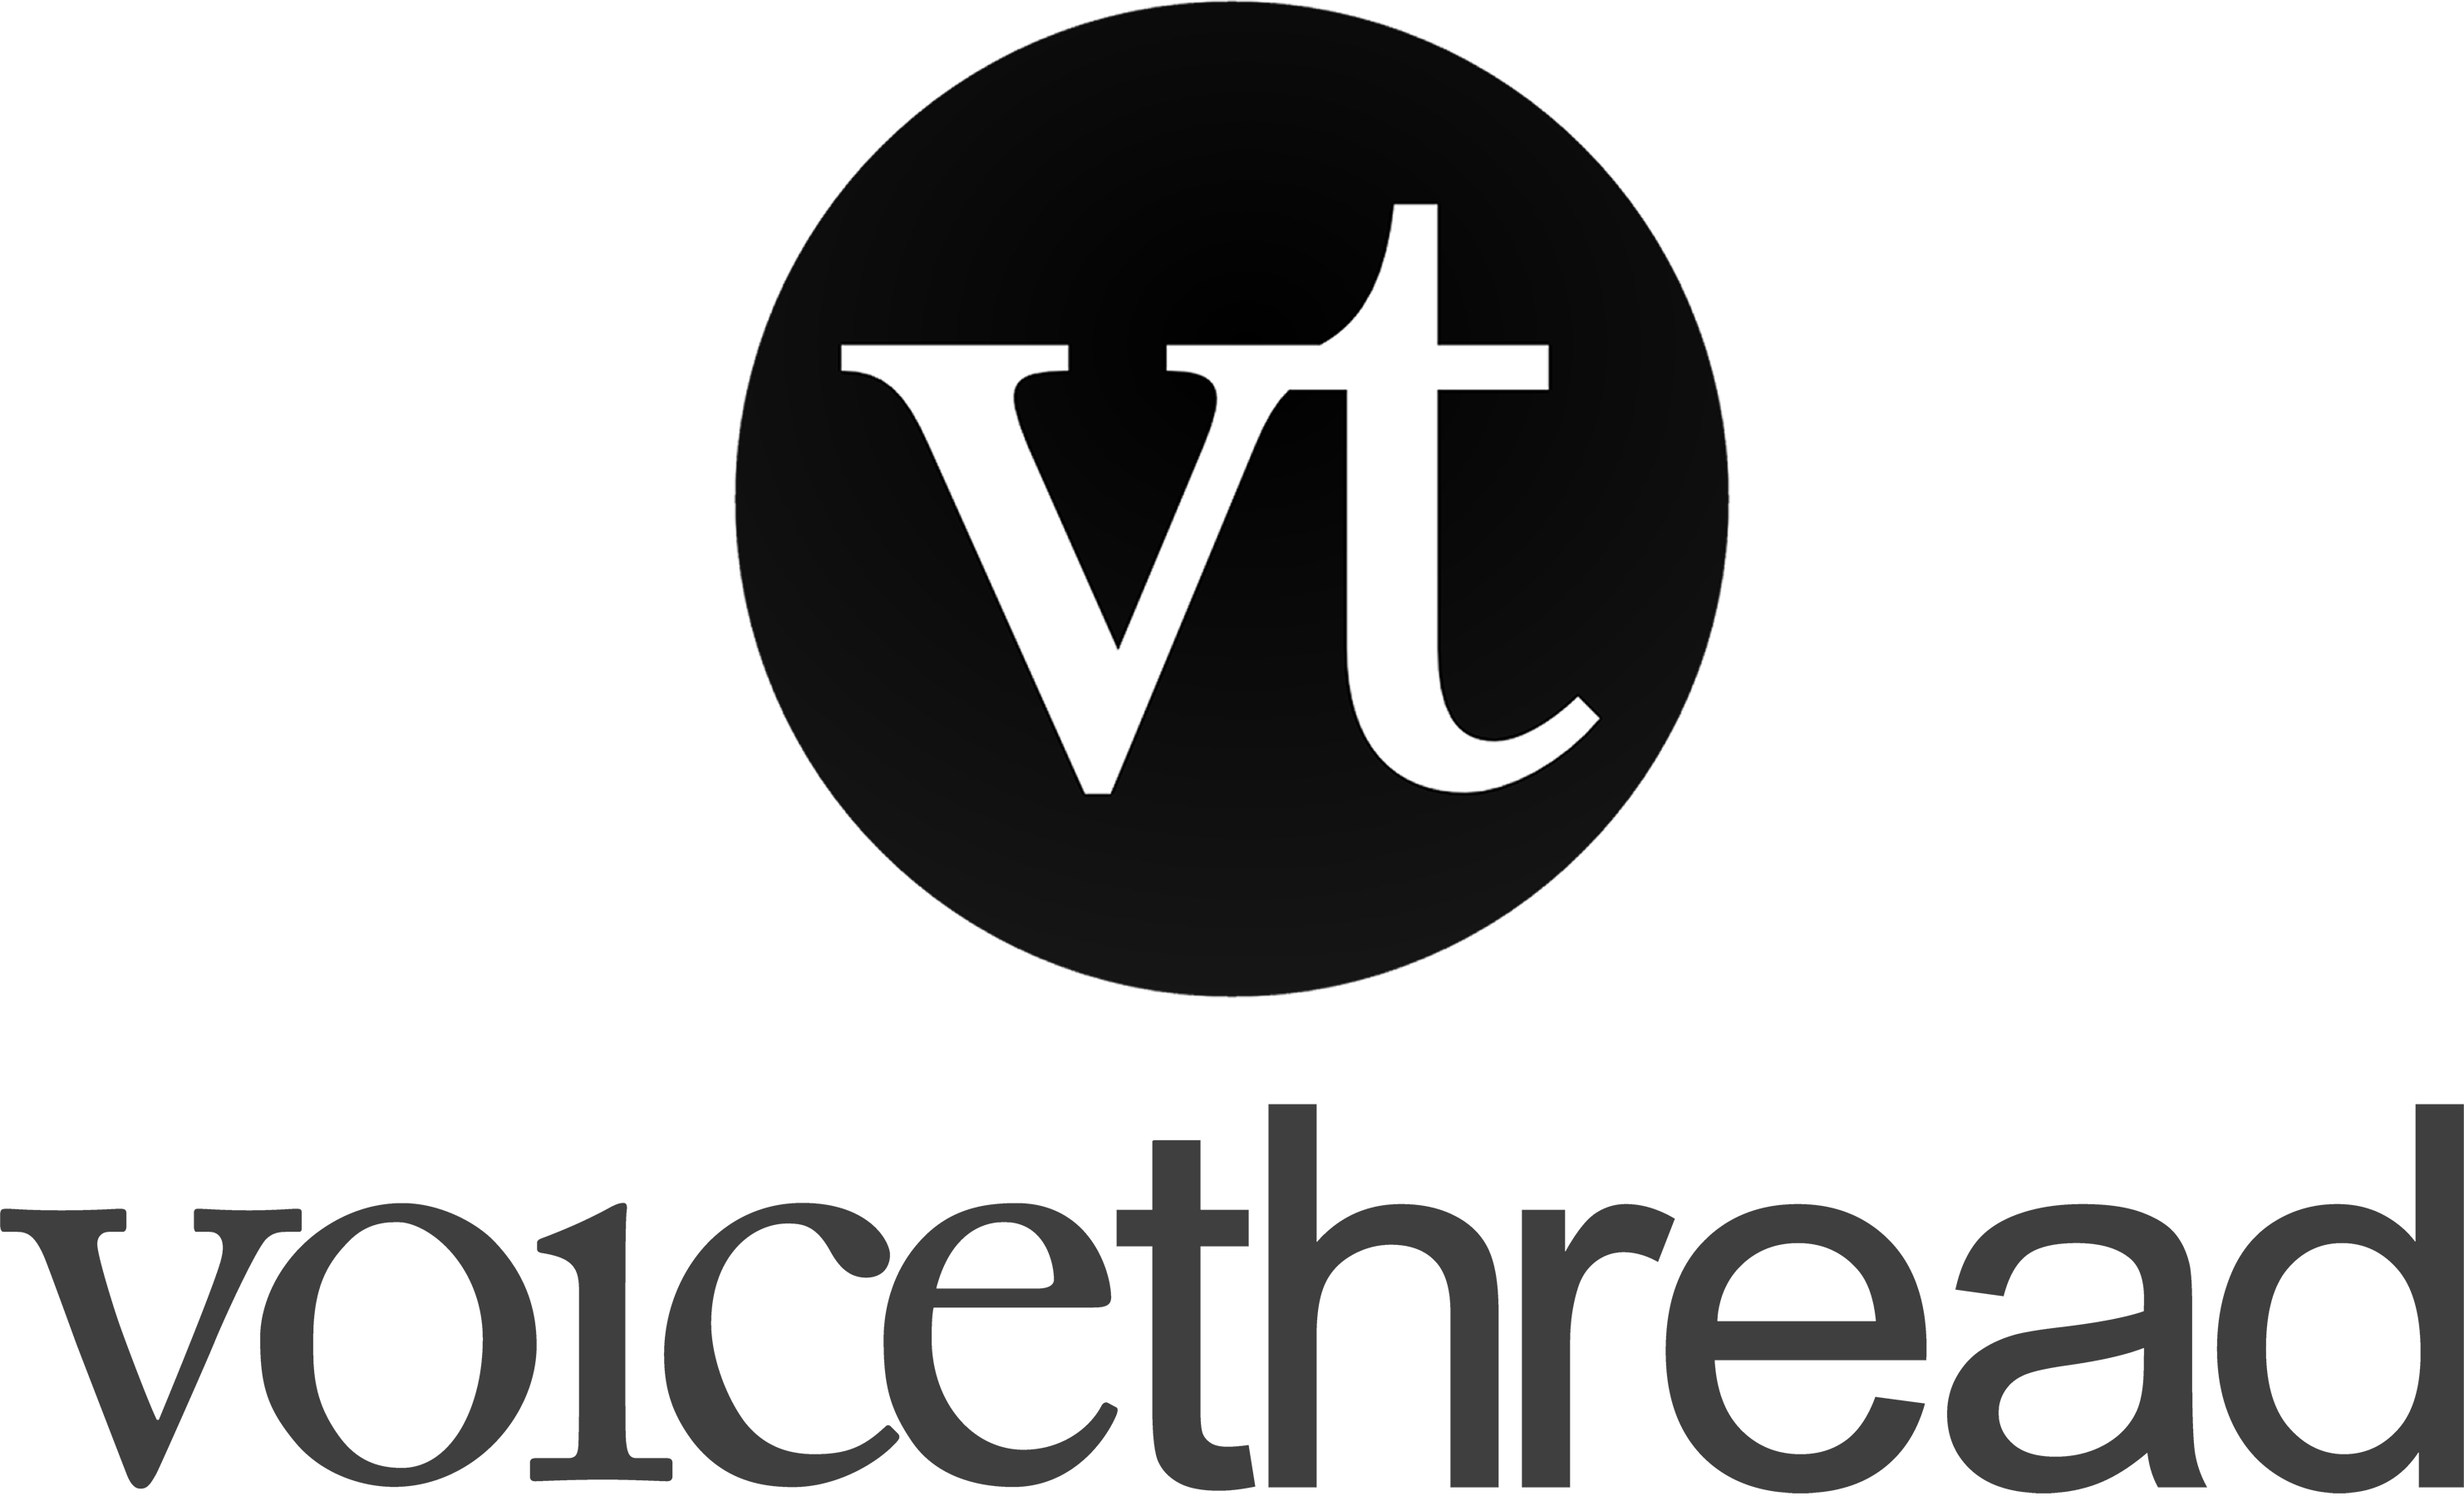 Voicethread Logo